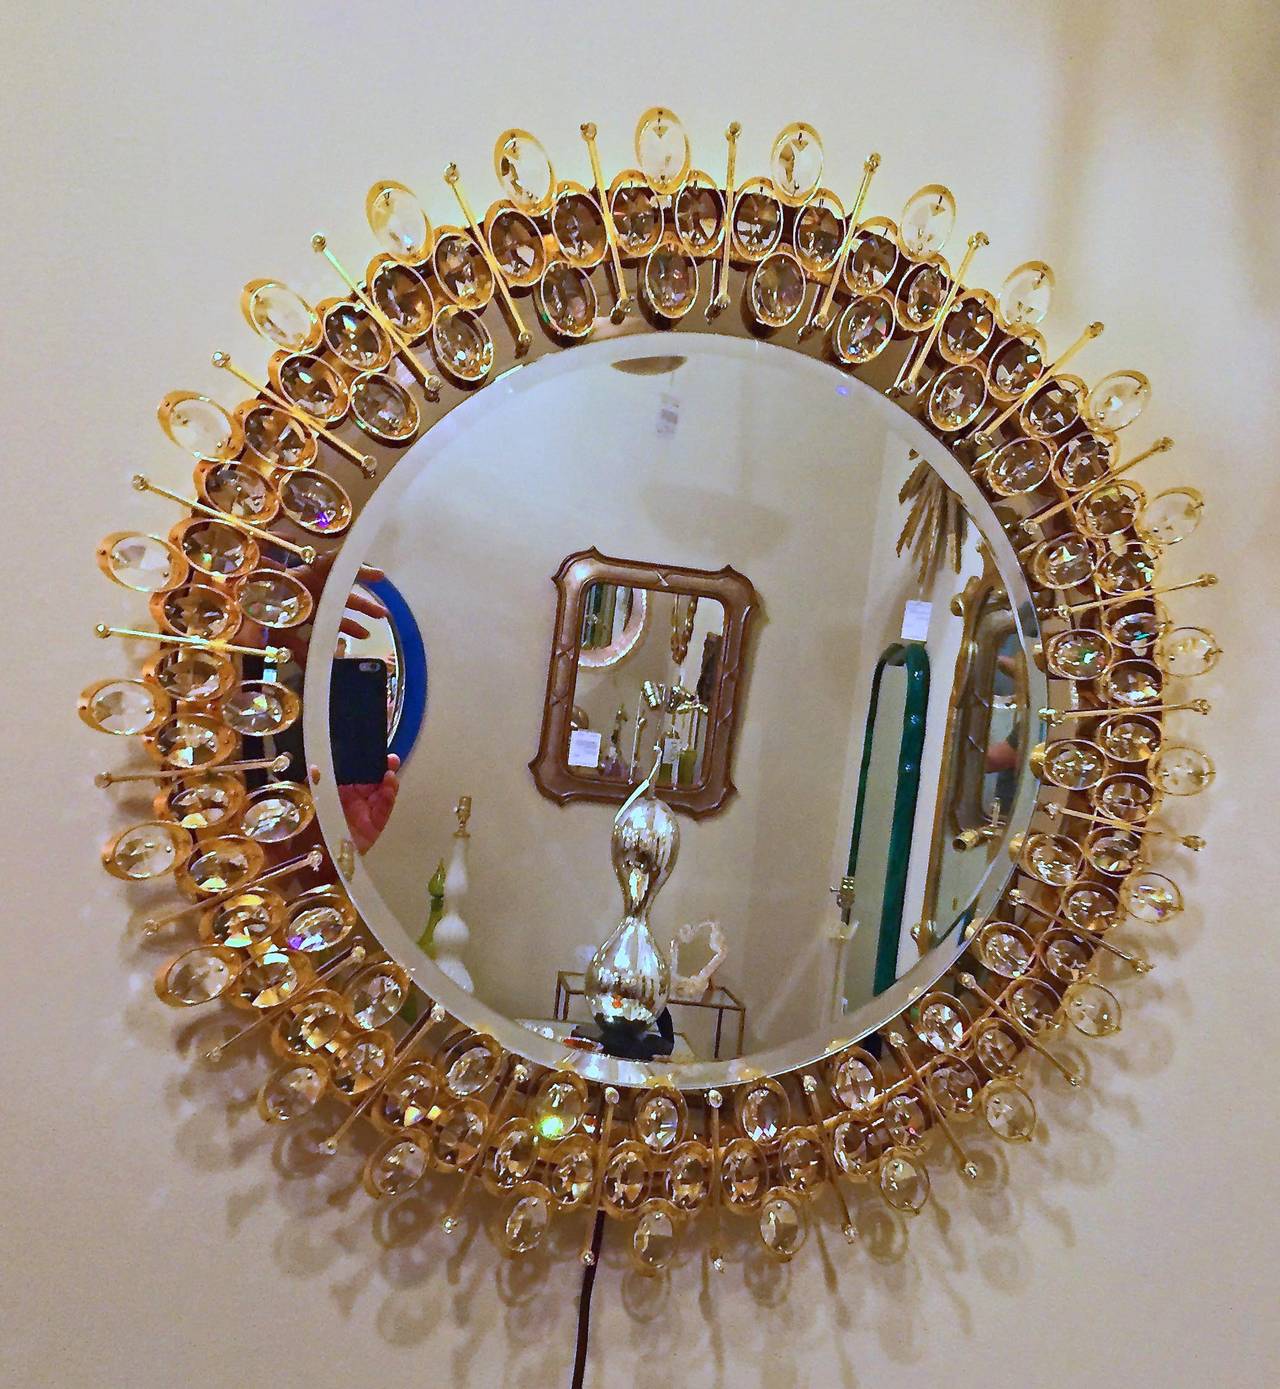 1960s lobmeyr mirror